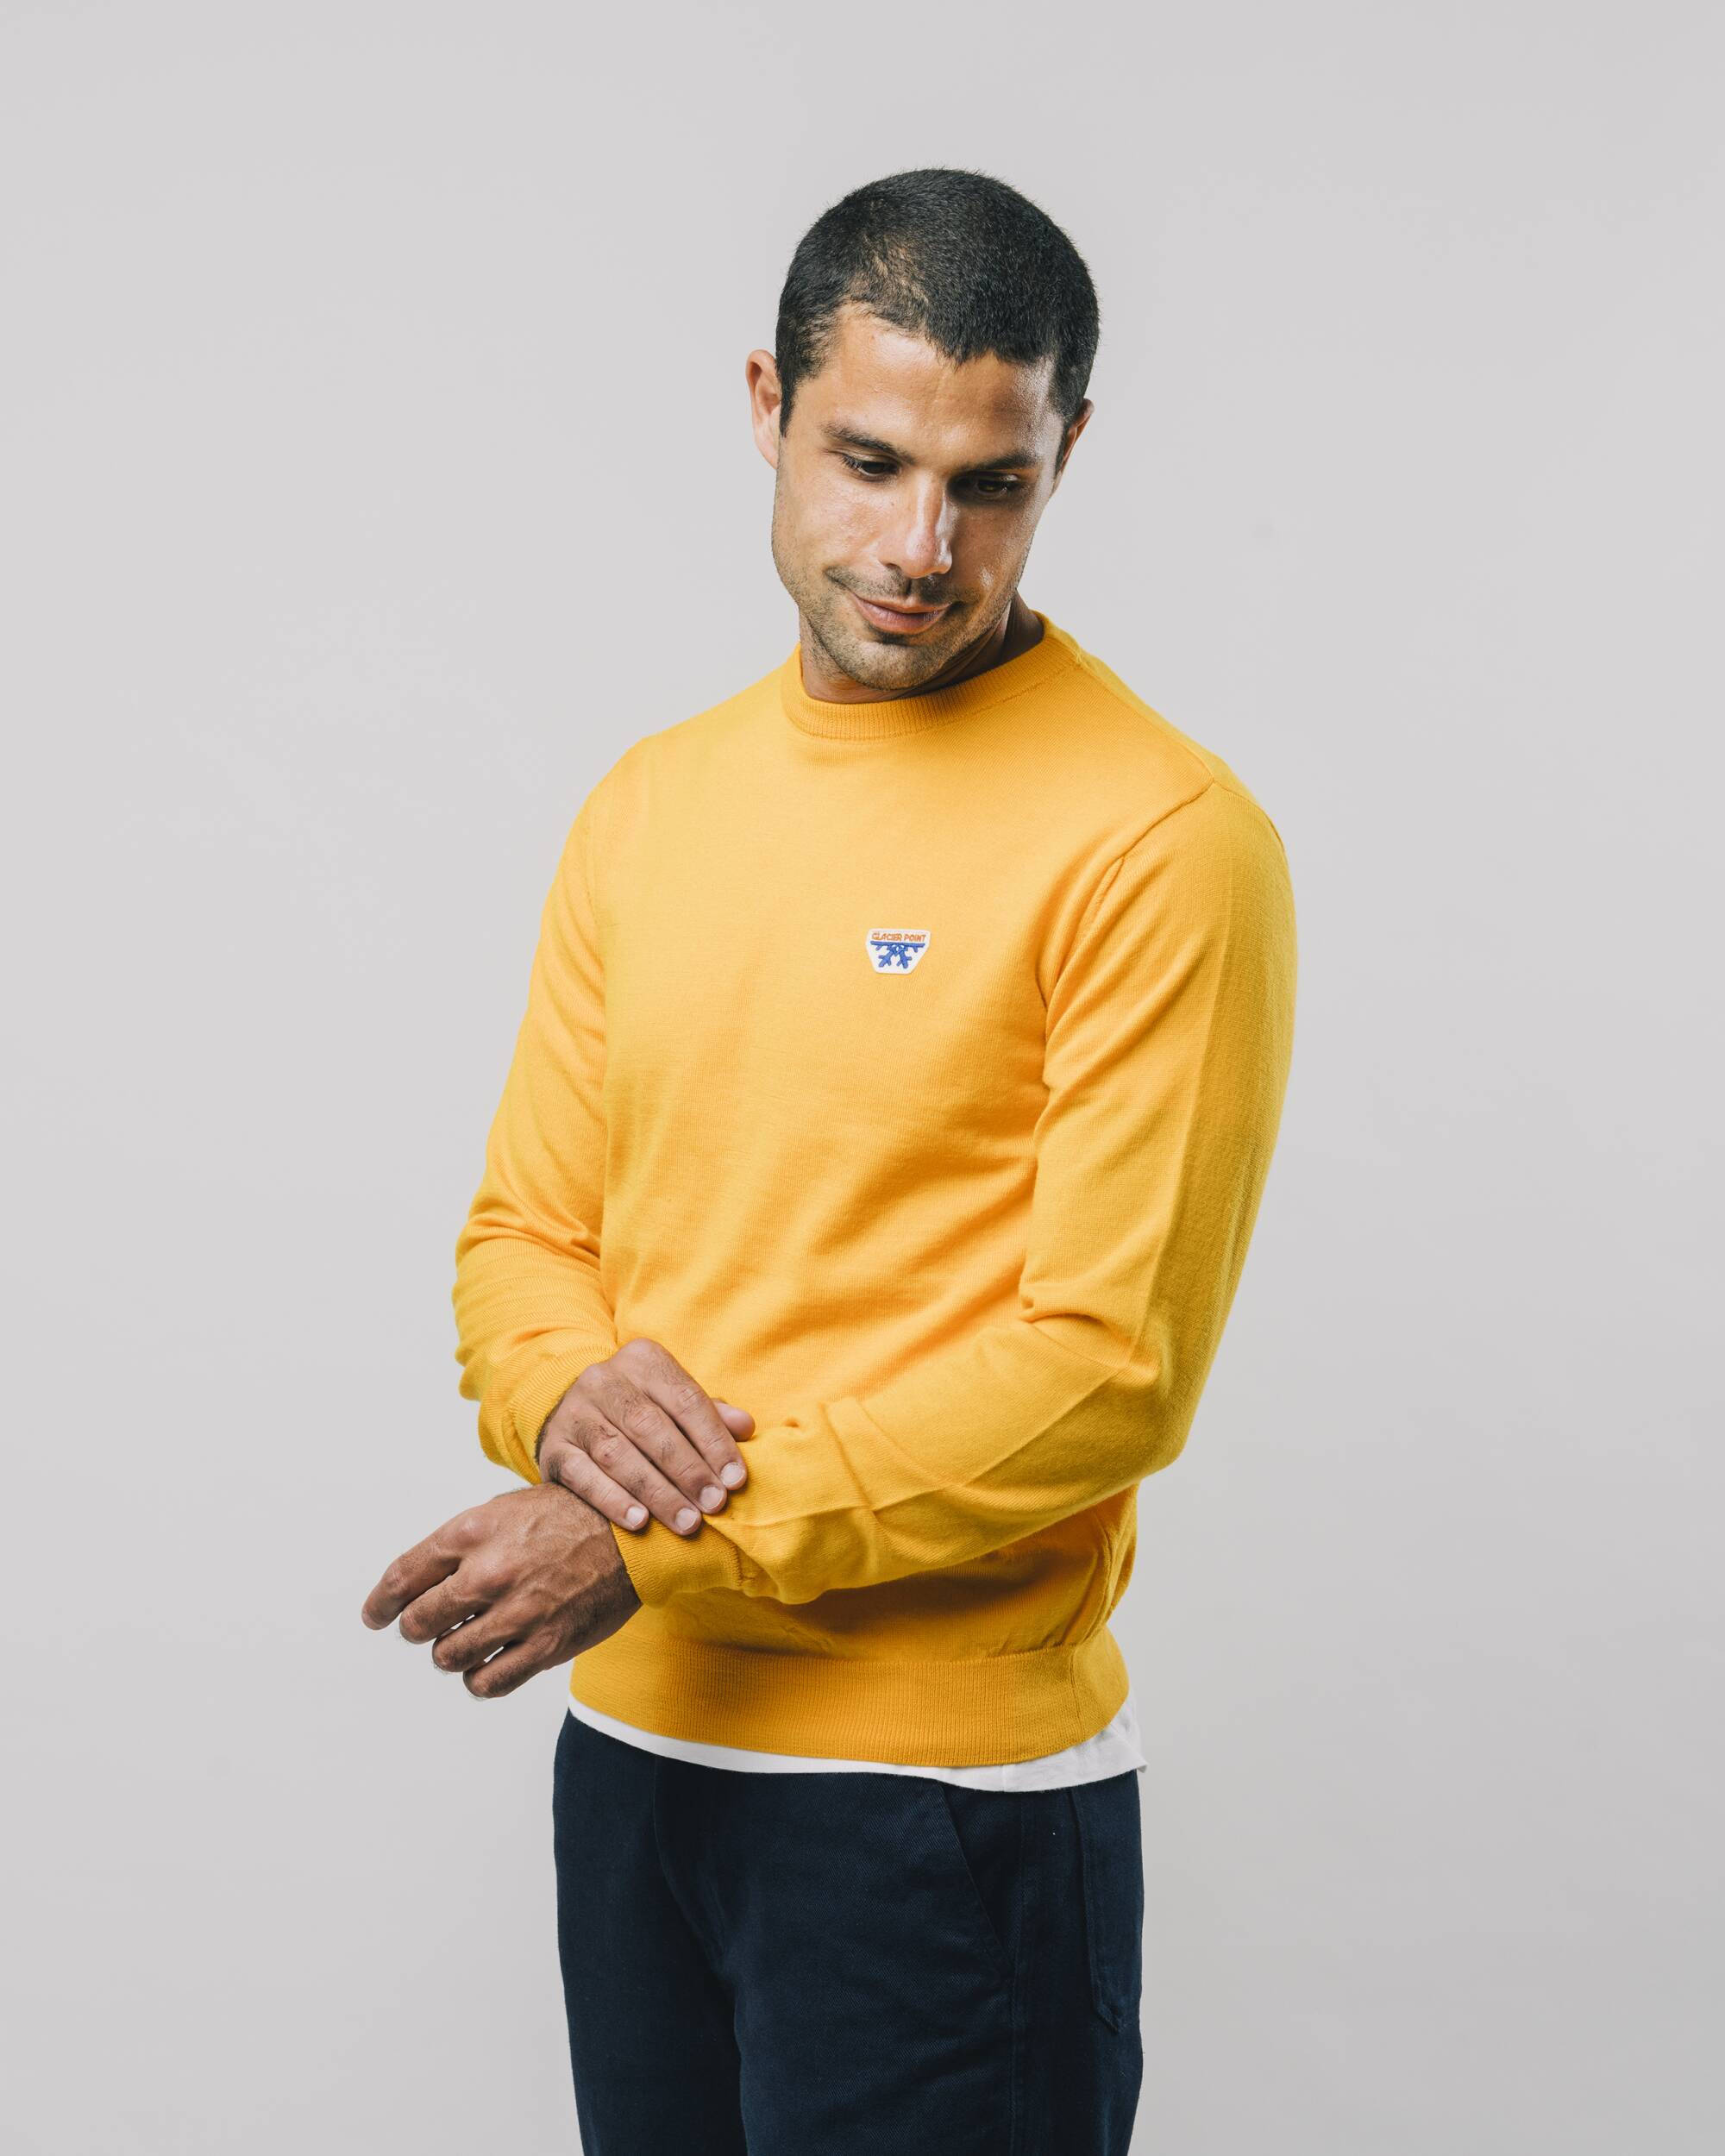 Sweater "Glacier Point" in Saffron - Yellow made from 100% Merino wool by Brava Fabrics